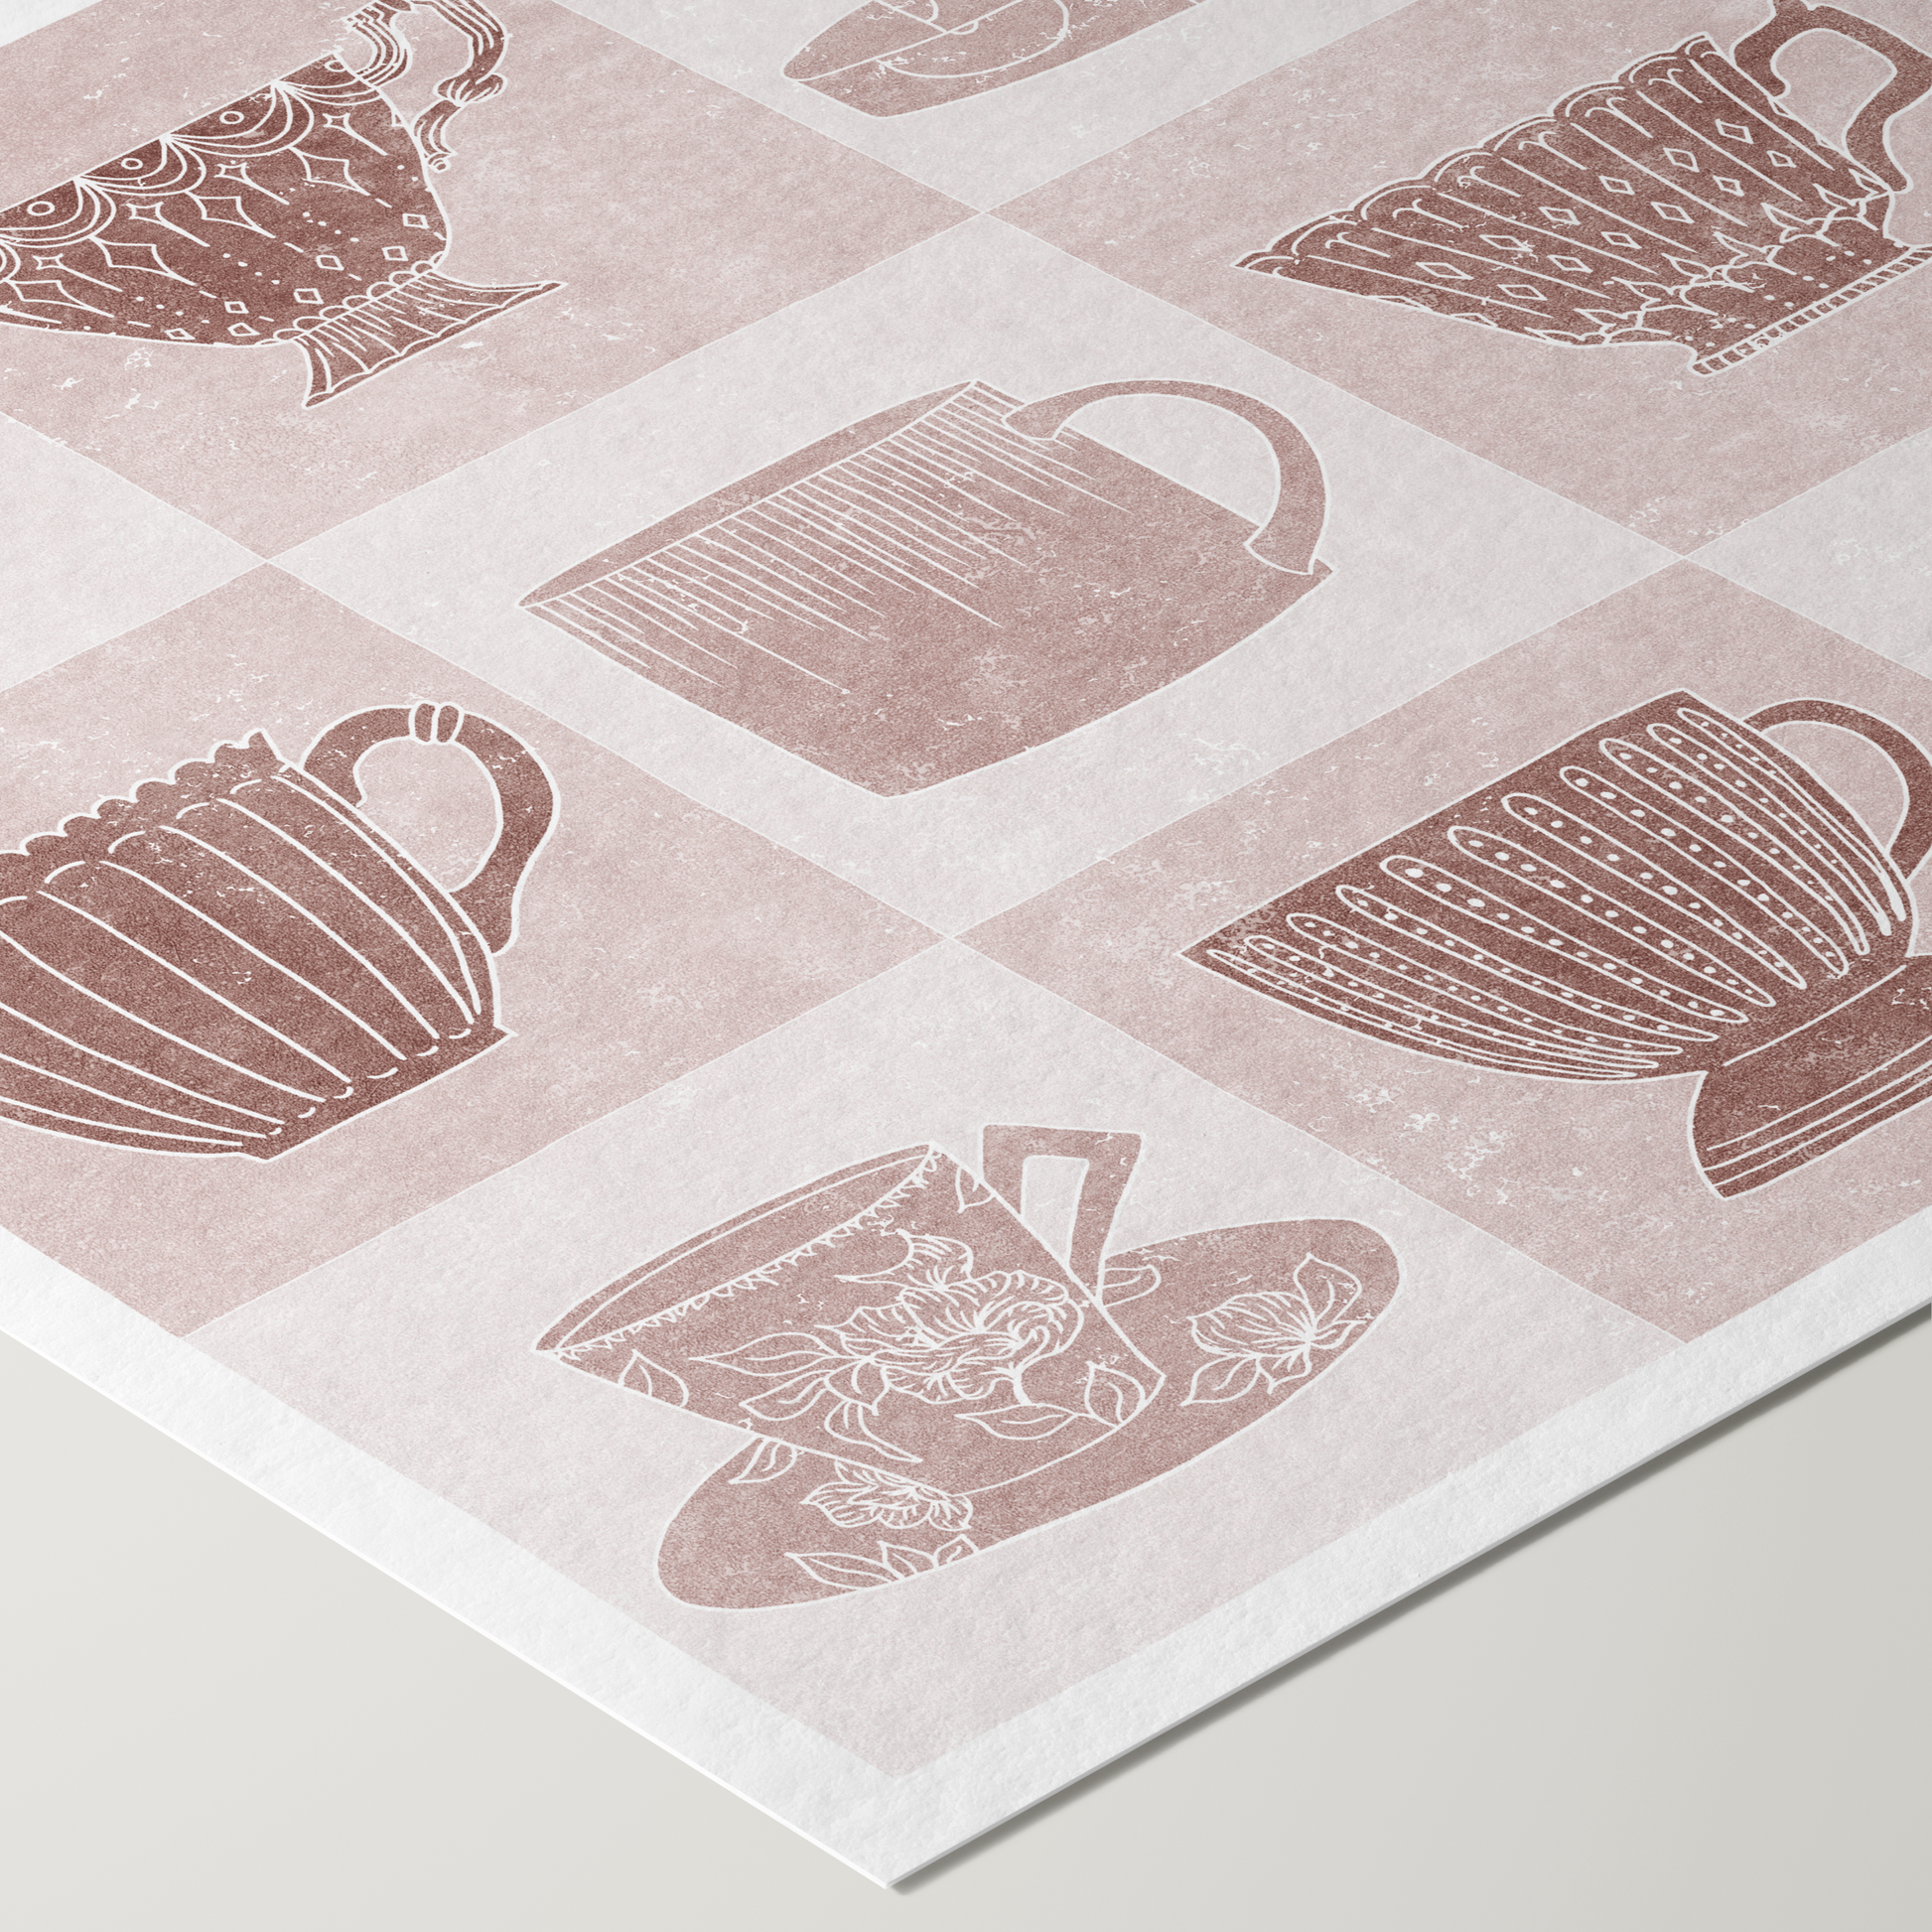 Home Decor Print - Giclee Print - Nature-inspired Prints - Teacups - Framed - Linocut Effect Illustration - Blush Pink - Hahnemühle German Etching Paper - Close Up